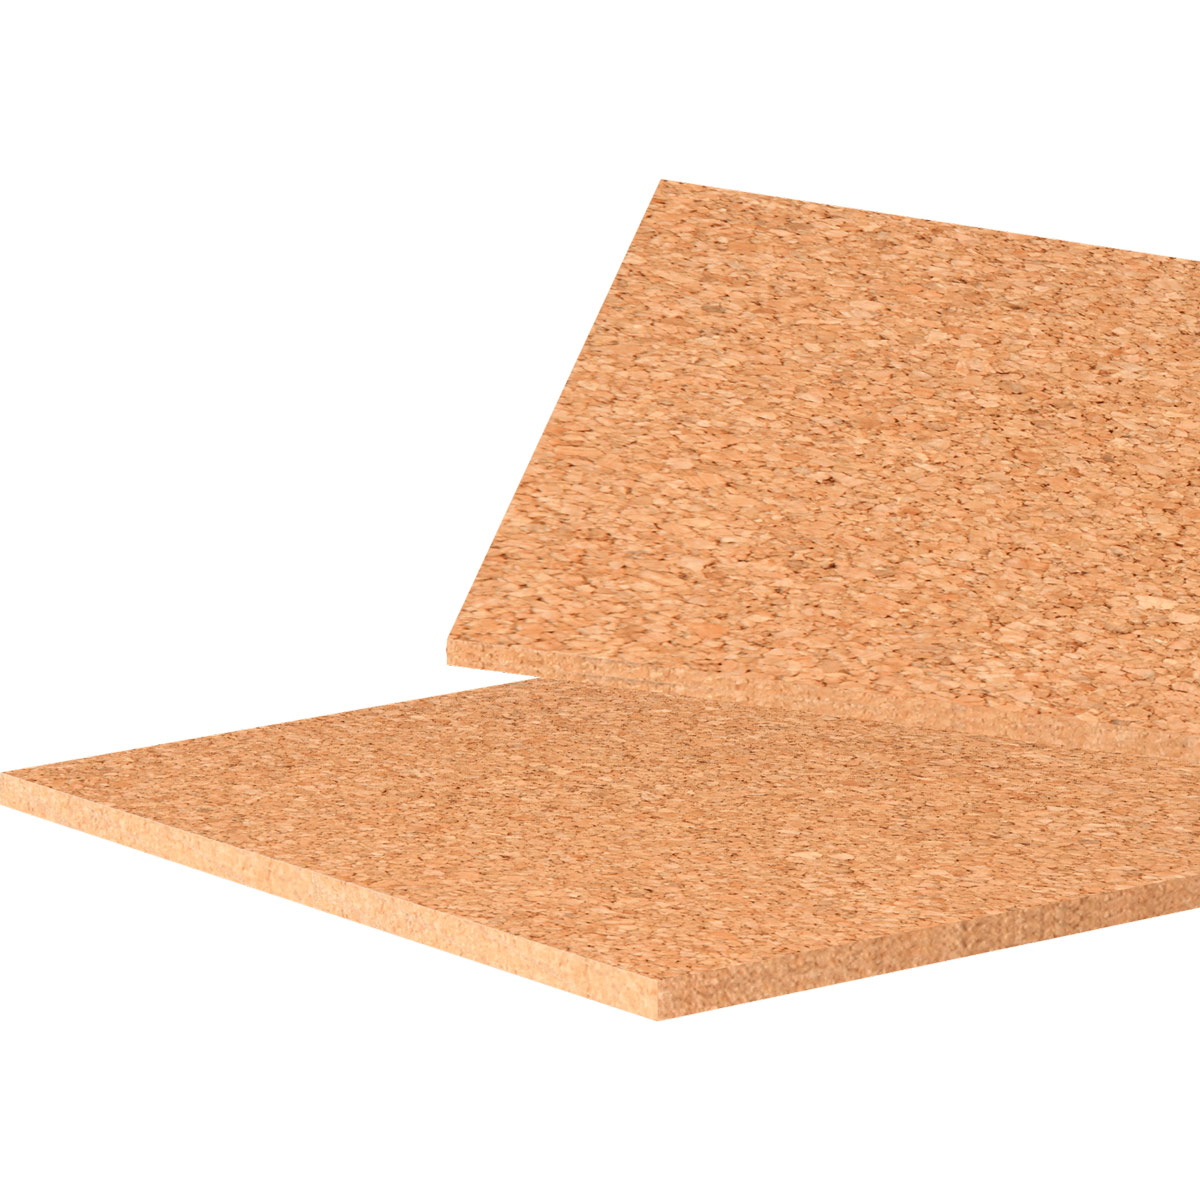 Cork sheet